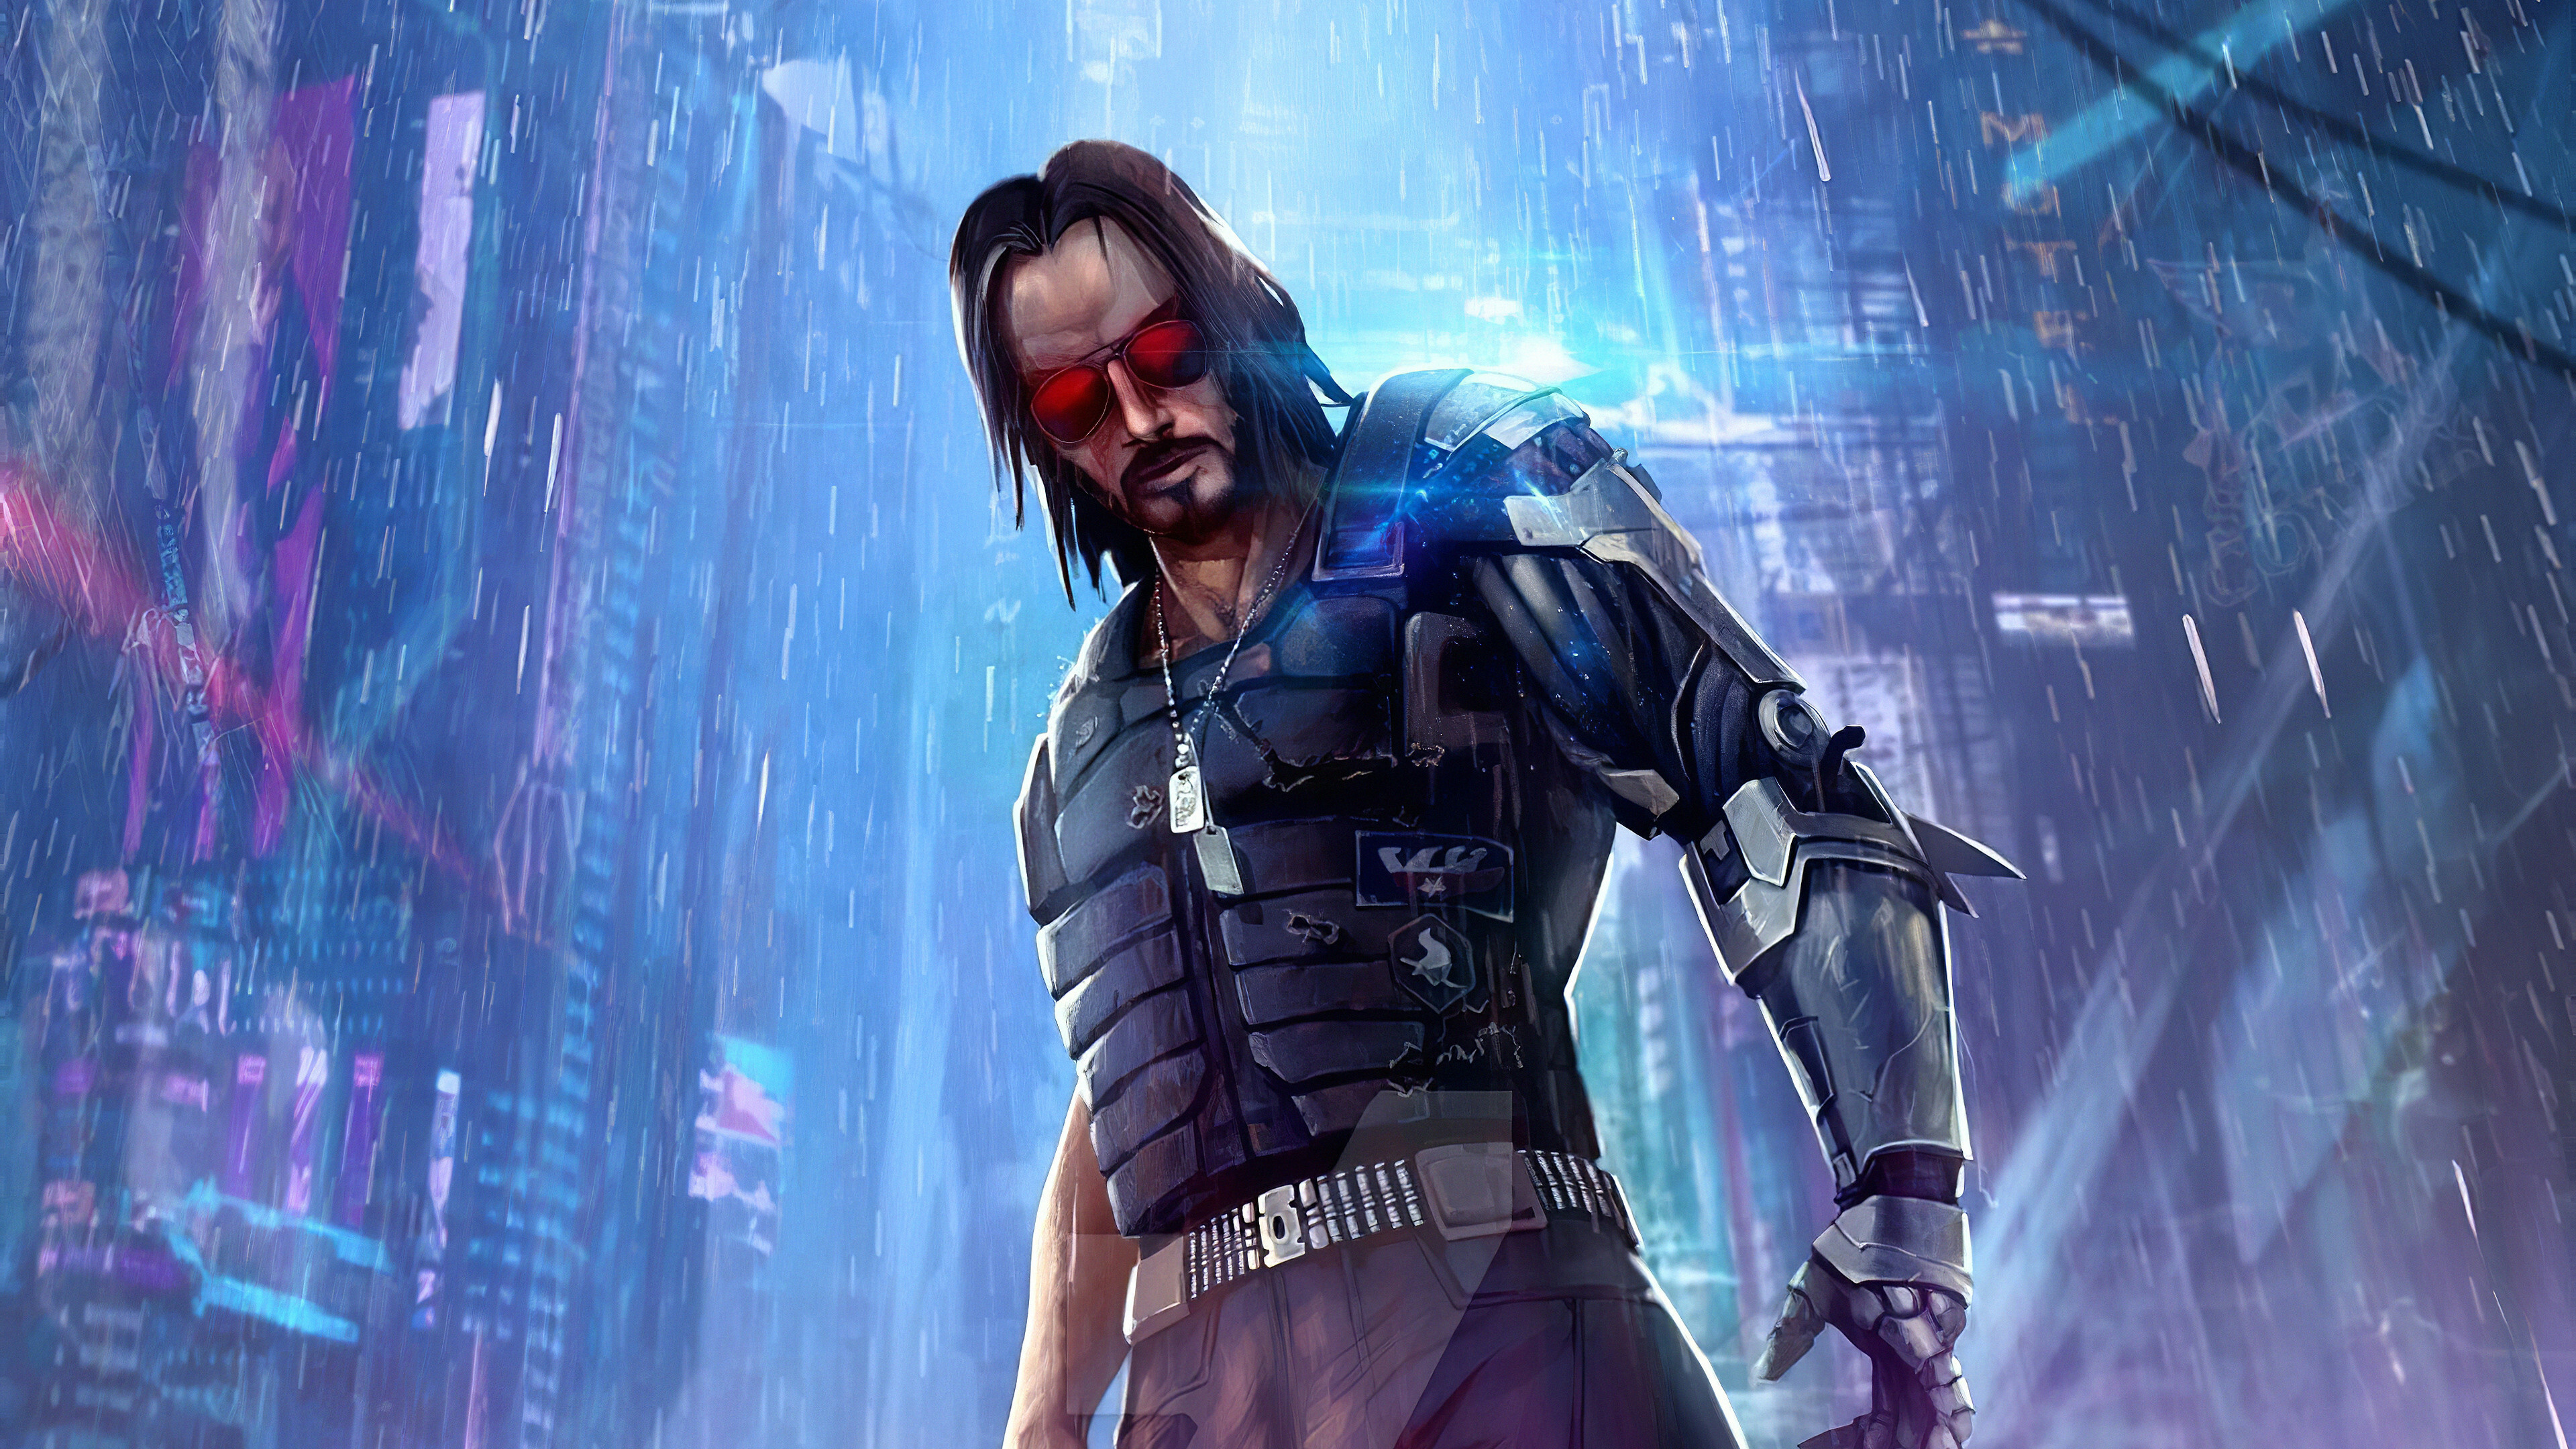 Cyberpunk 2077: Keanu Reeves as Johnny Silverhand, Game character. 3840x2160 4K Wallpaper.